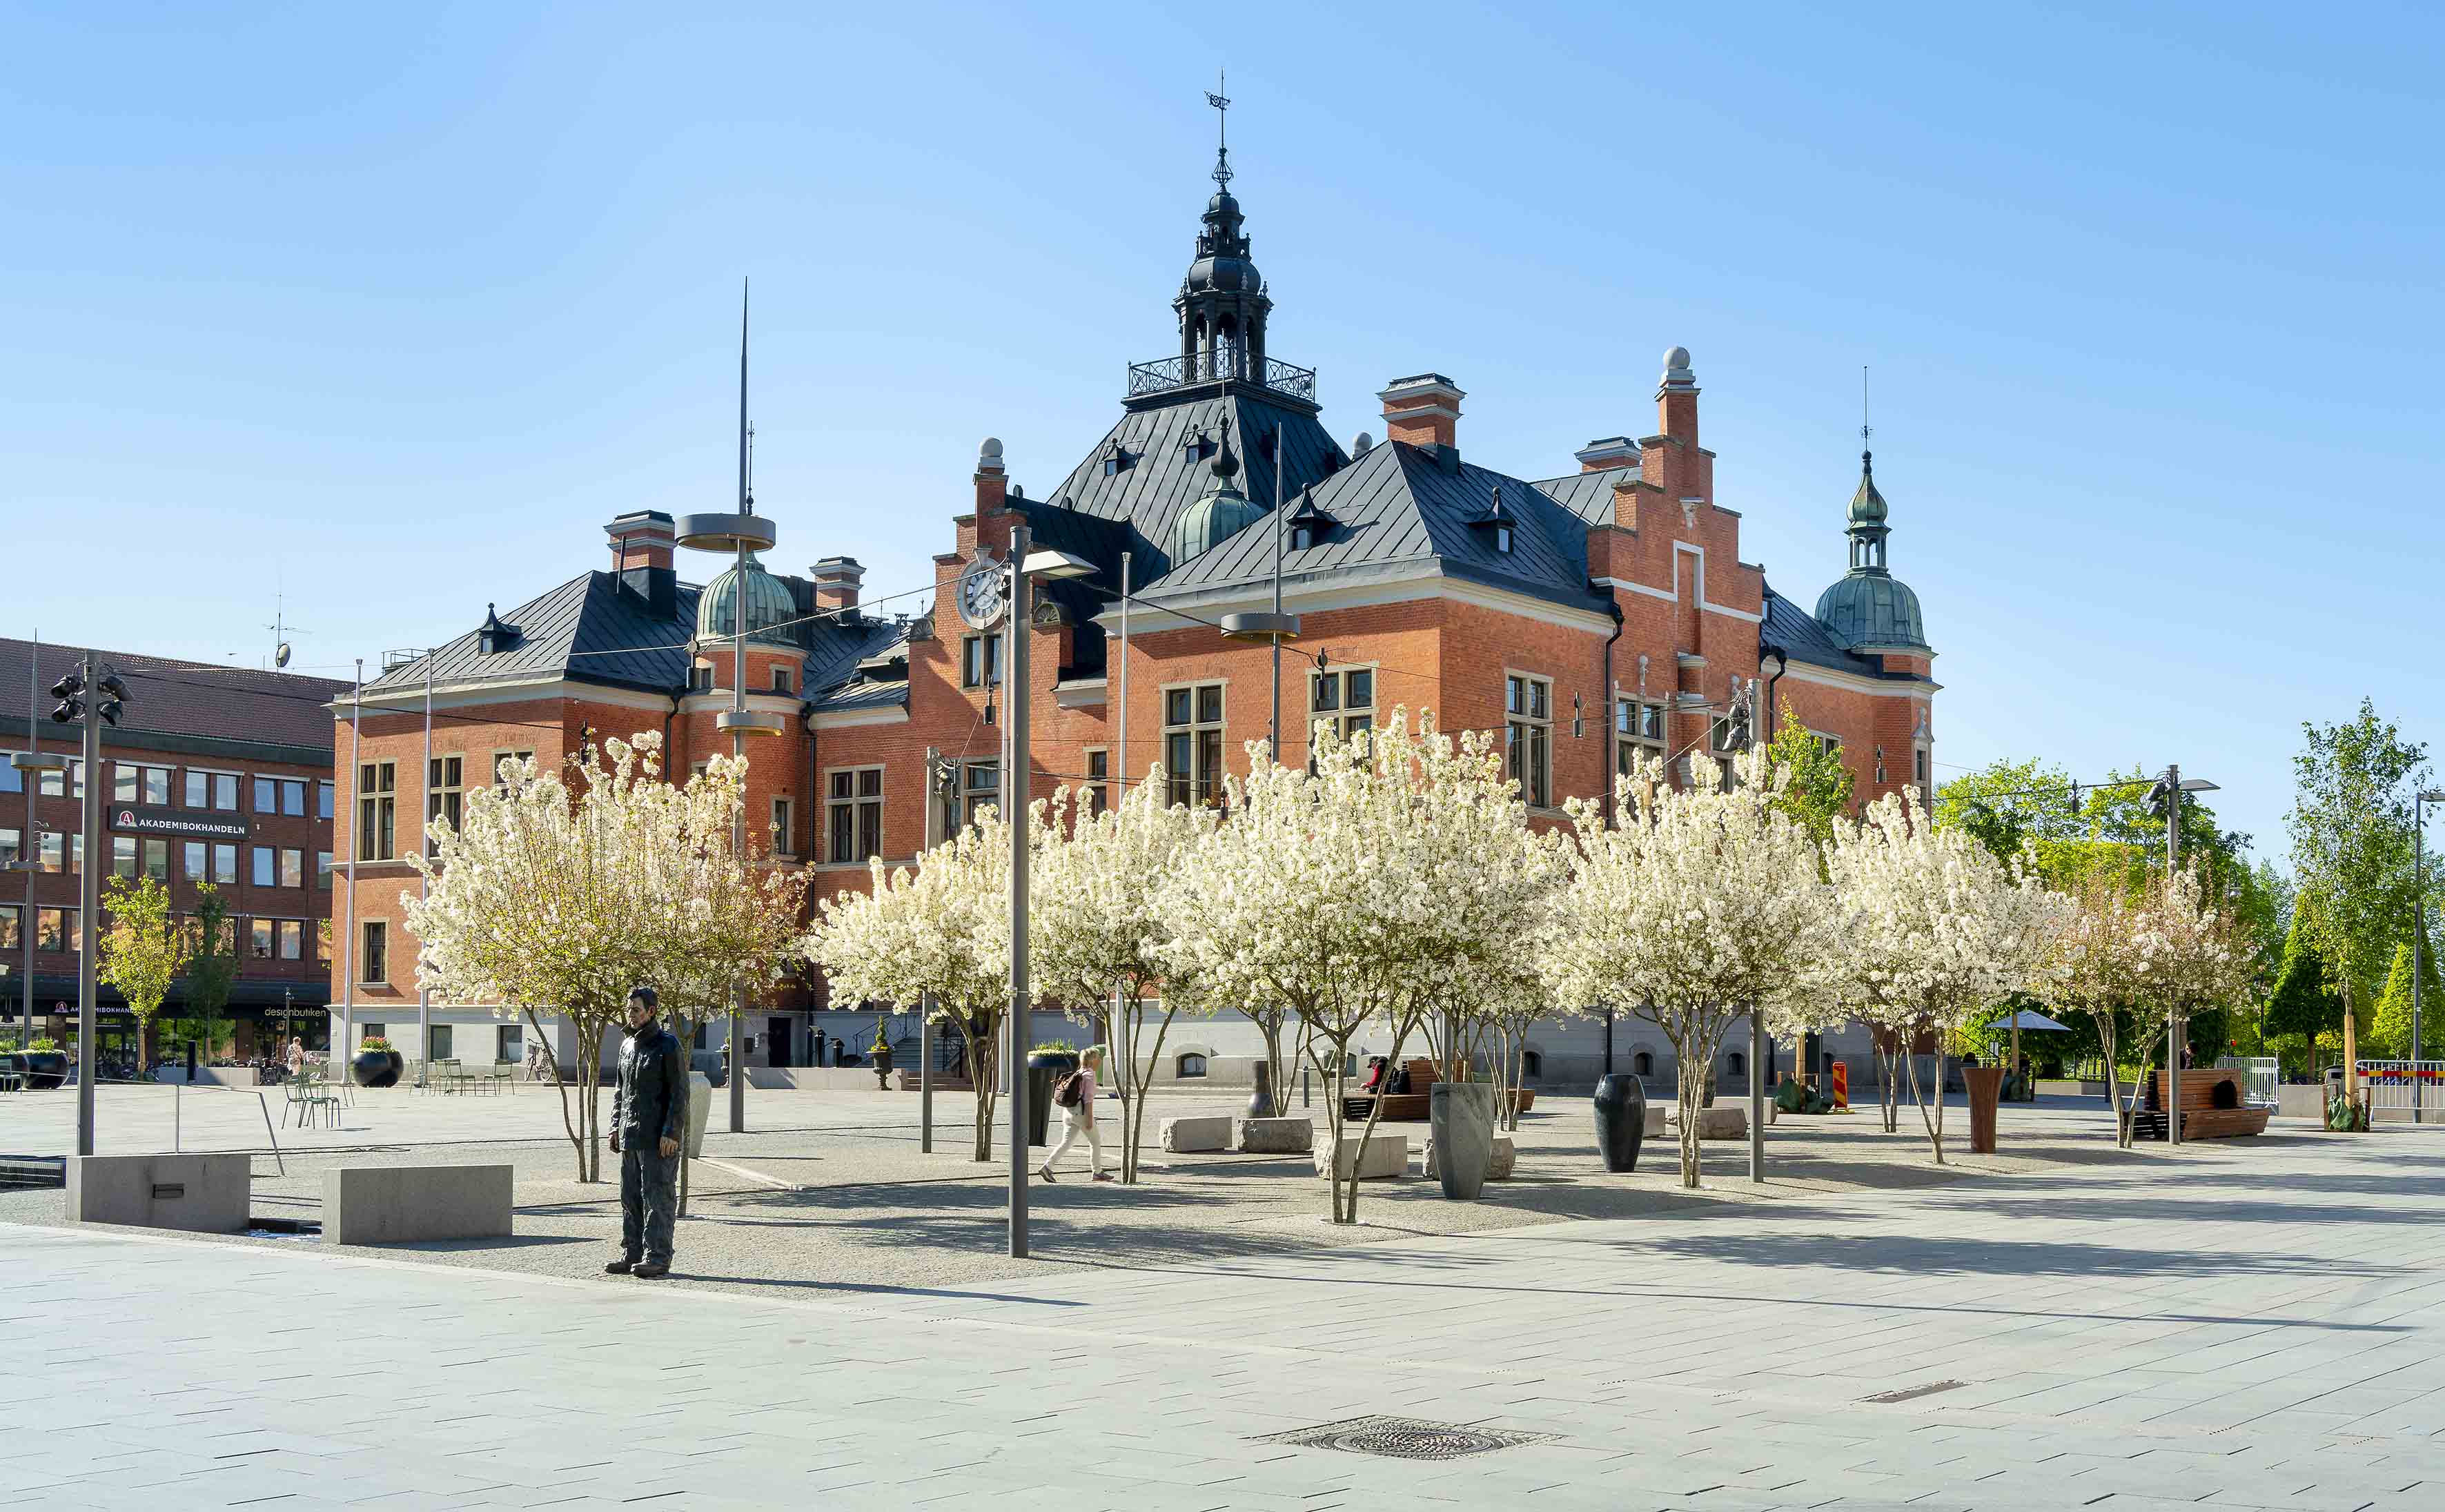 Town Hall Square, Umeå